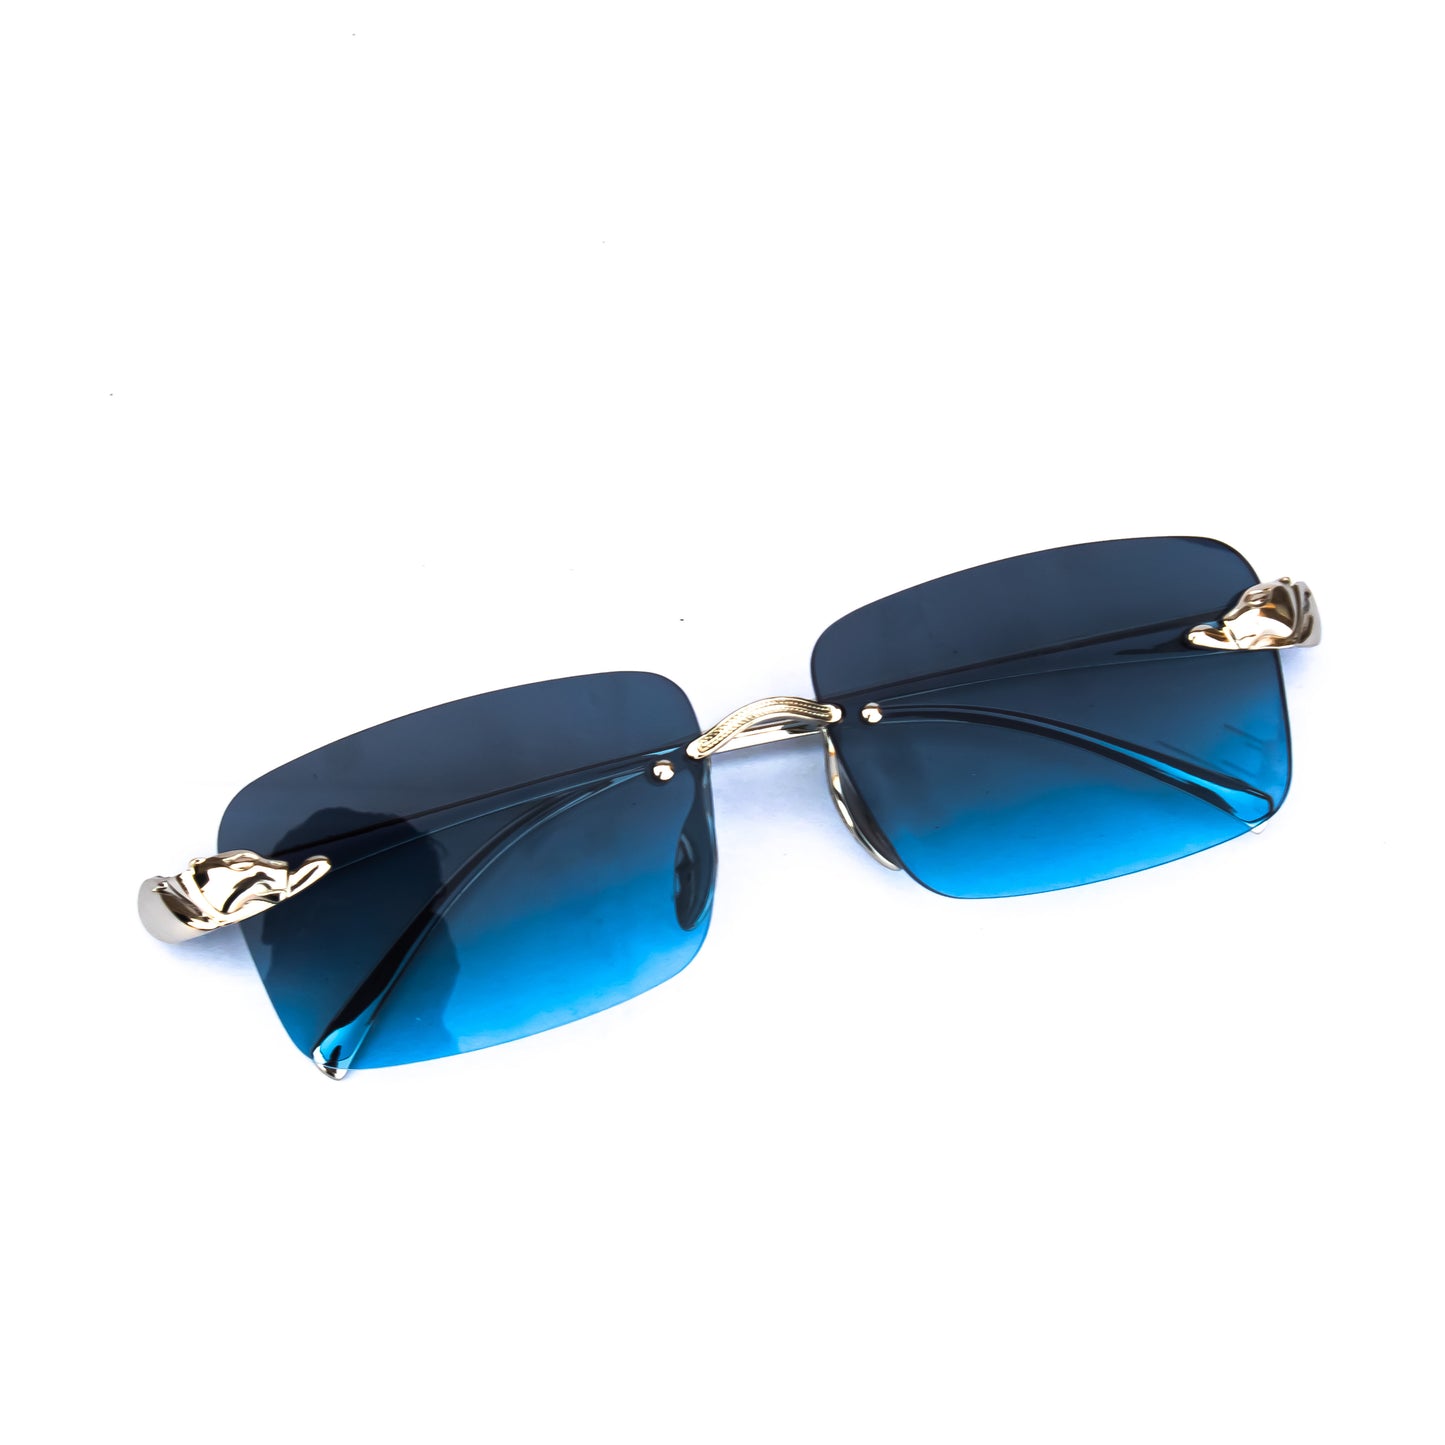 Polarized square sunglasses